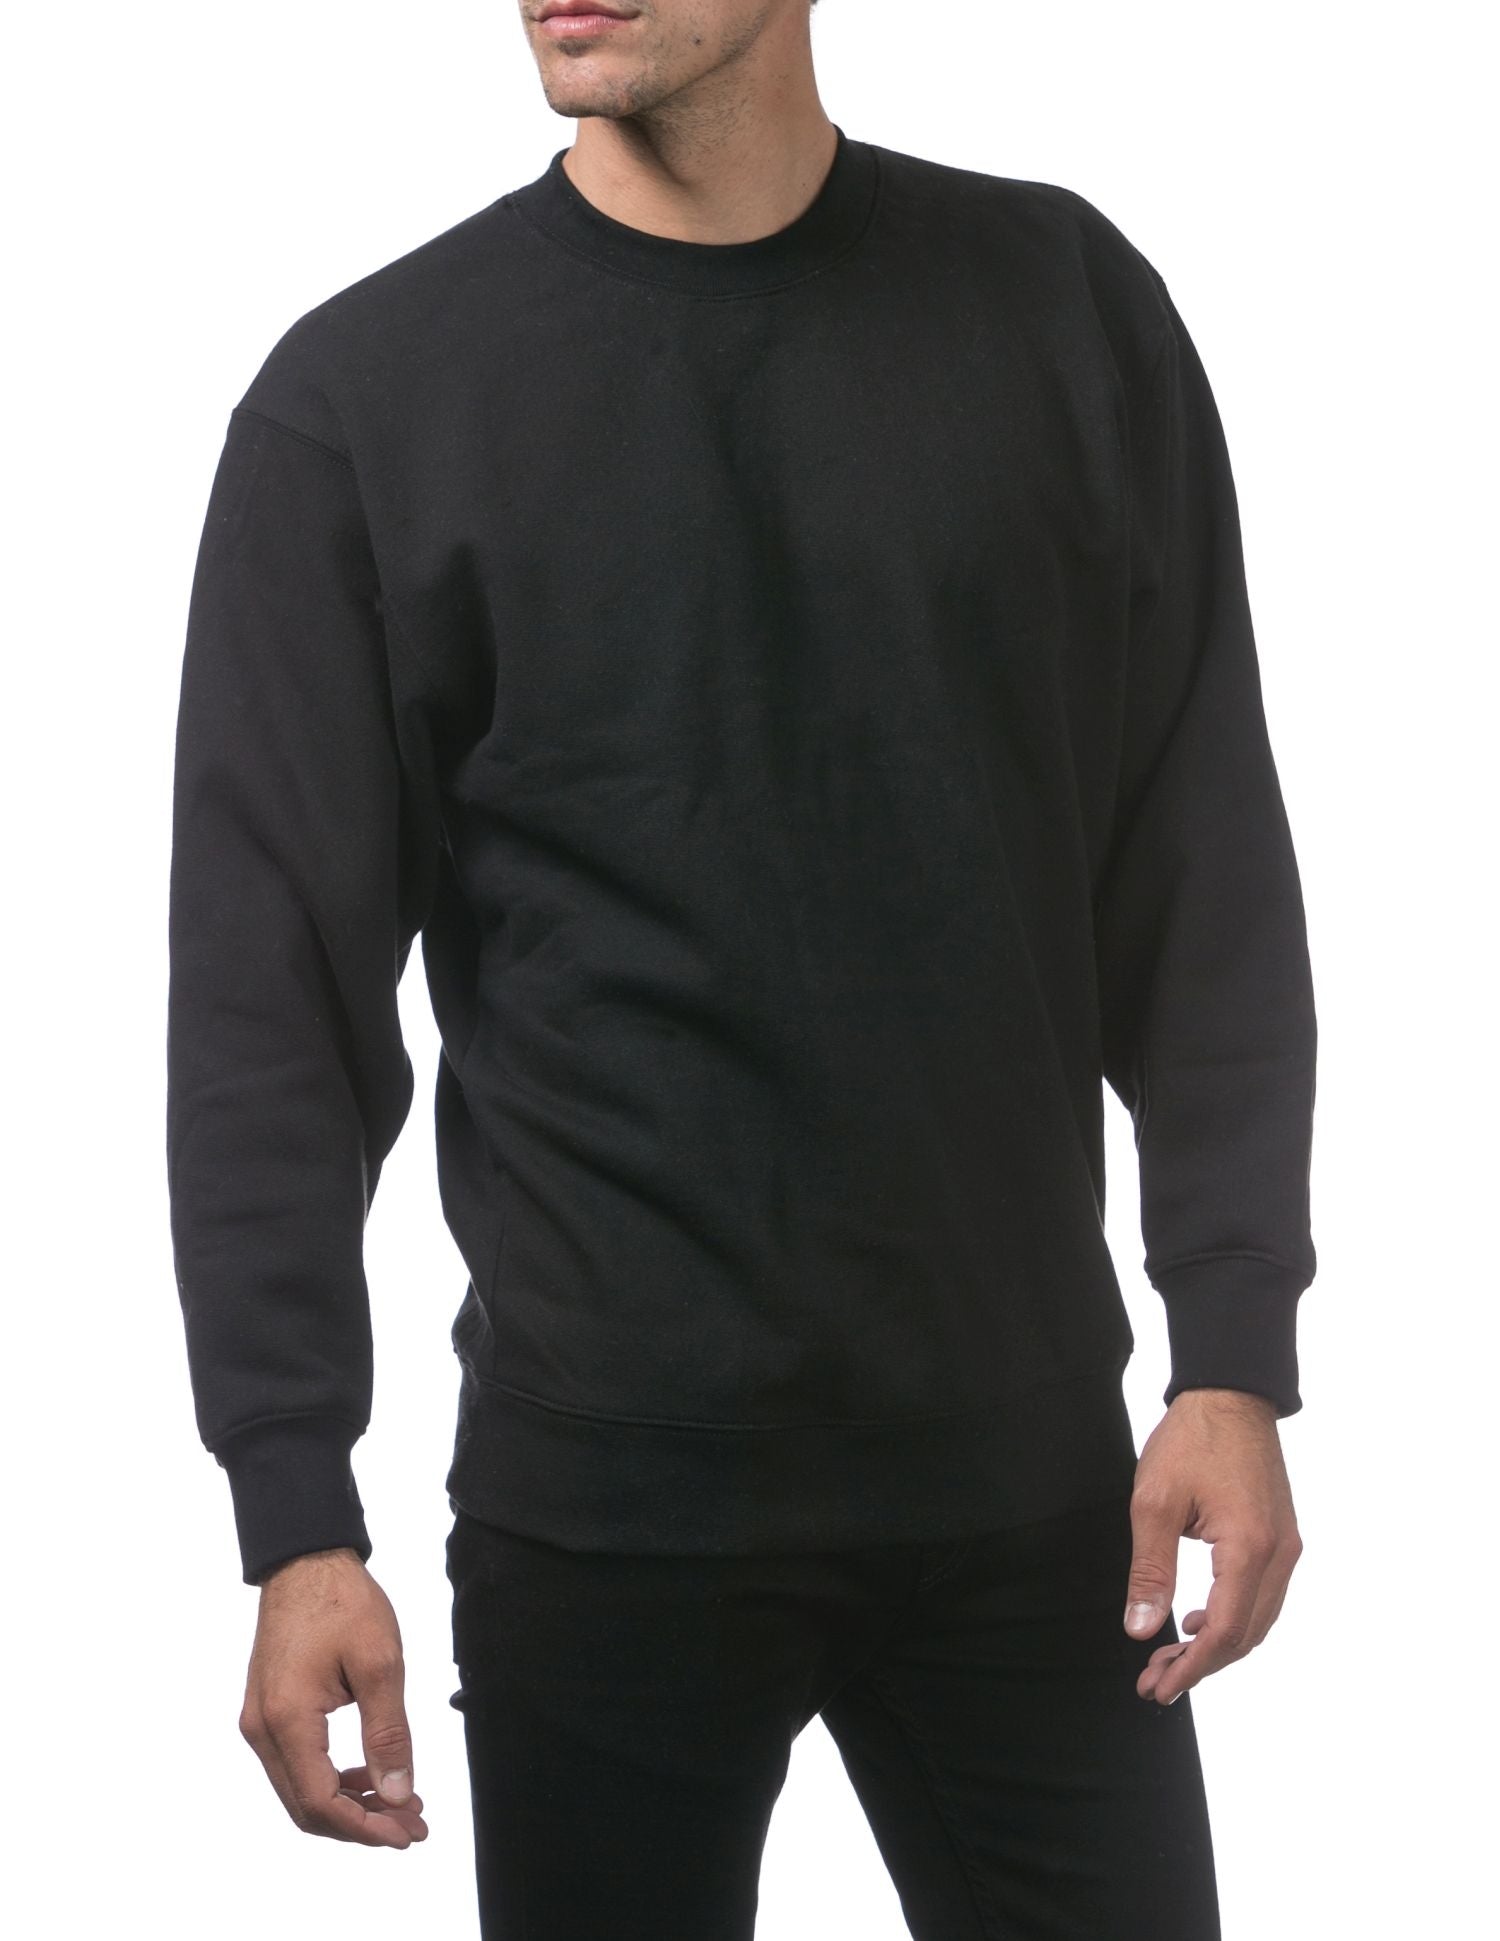 Pro Club Men's Comfort Crew Neck Fleece Pullover Sweater - Black - Large - Pro-Distributing